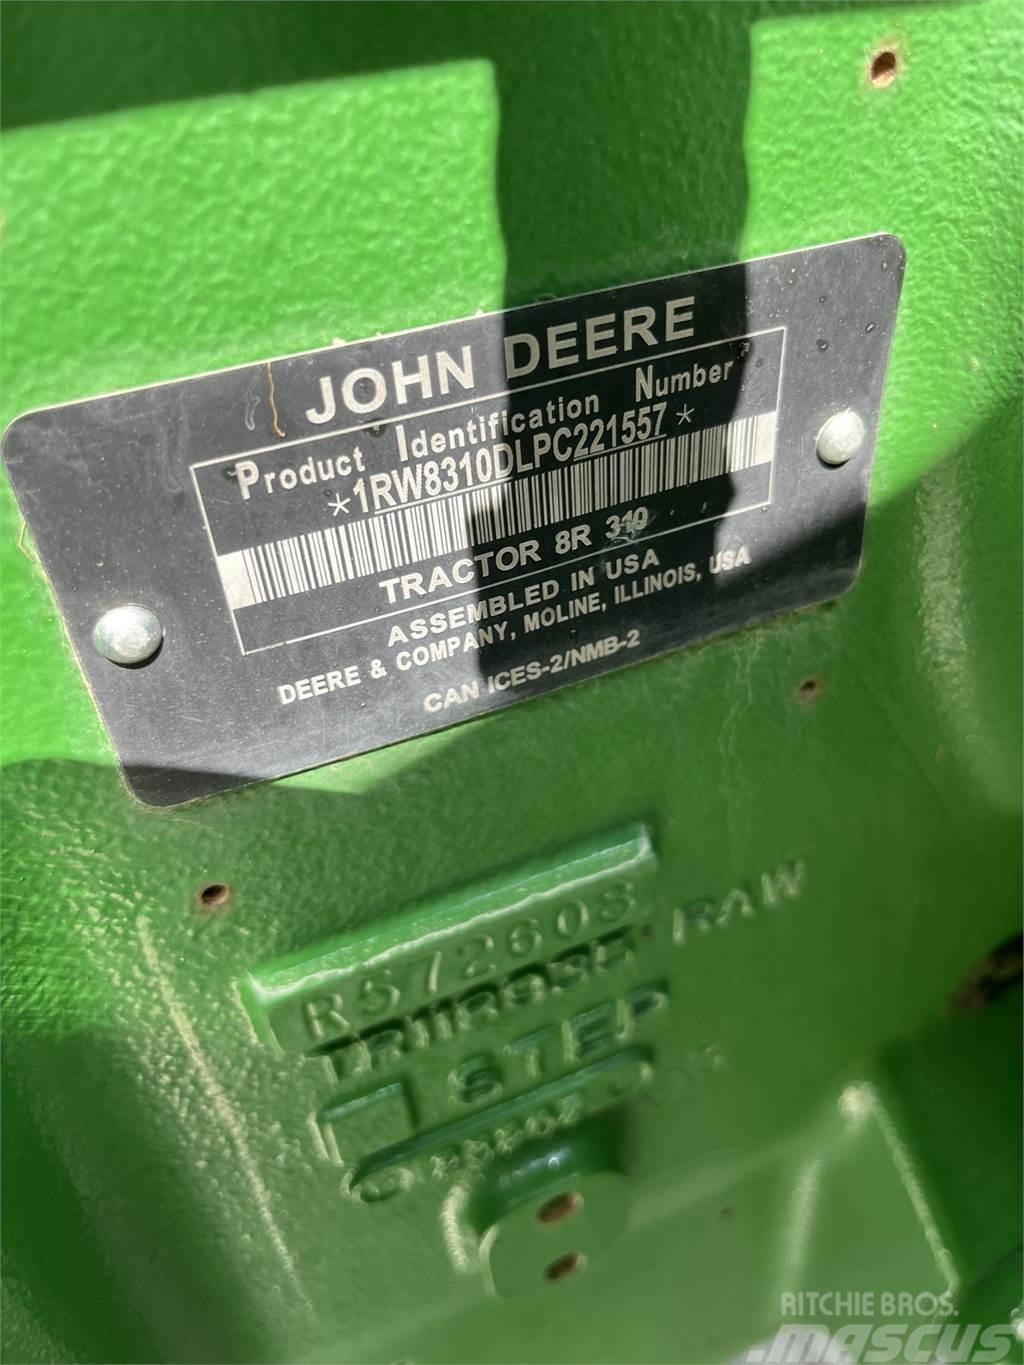 John Deere 8R 310 Tratores Agrícolas usados